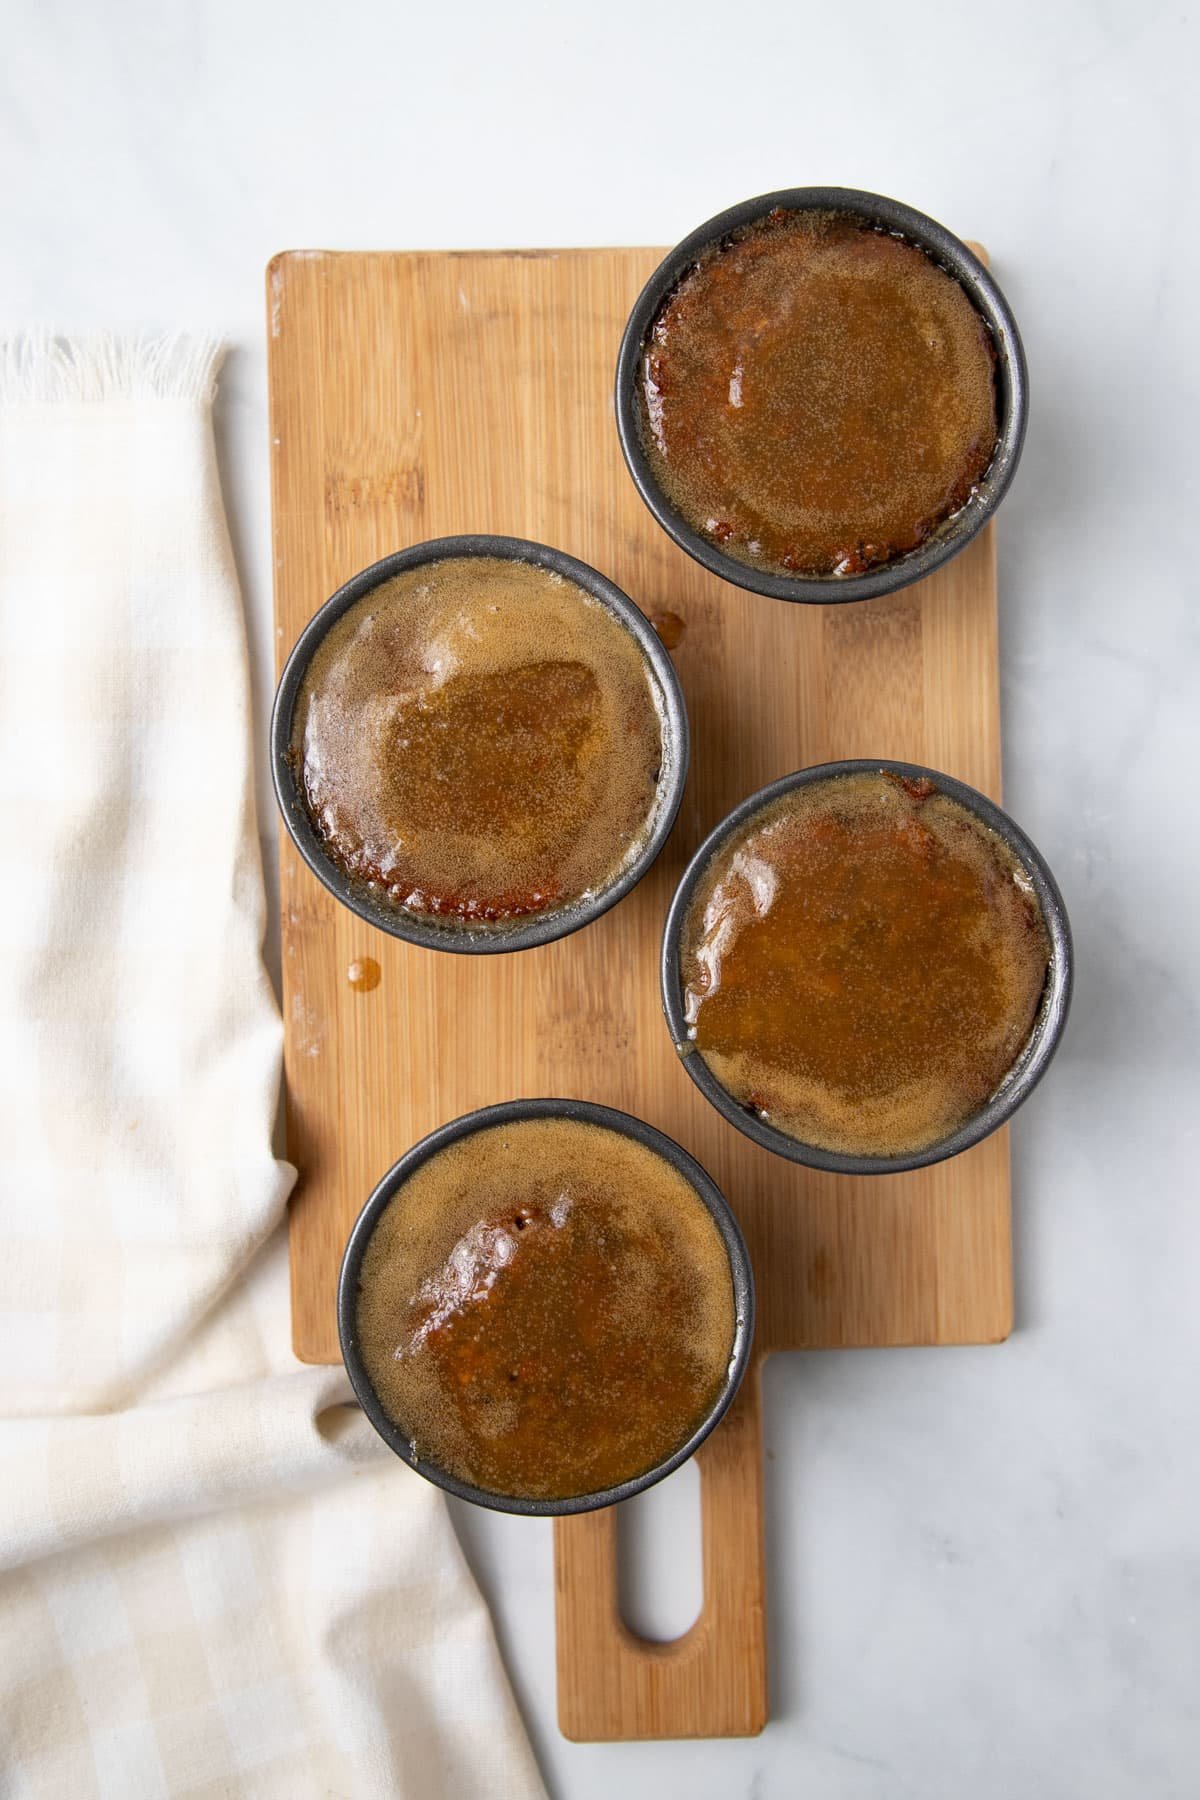 puddings soaking in caramel sauce.